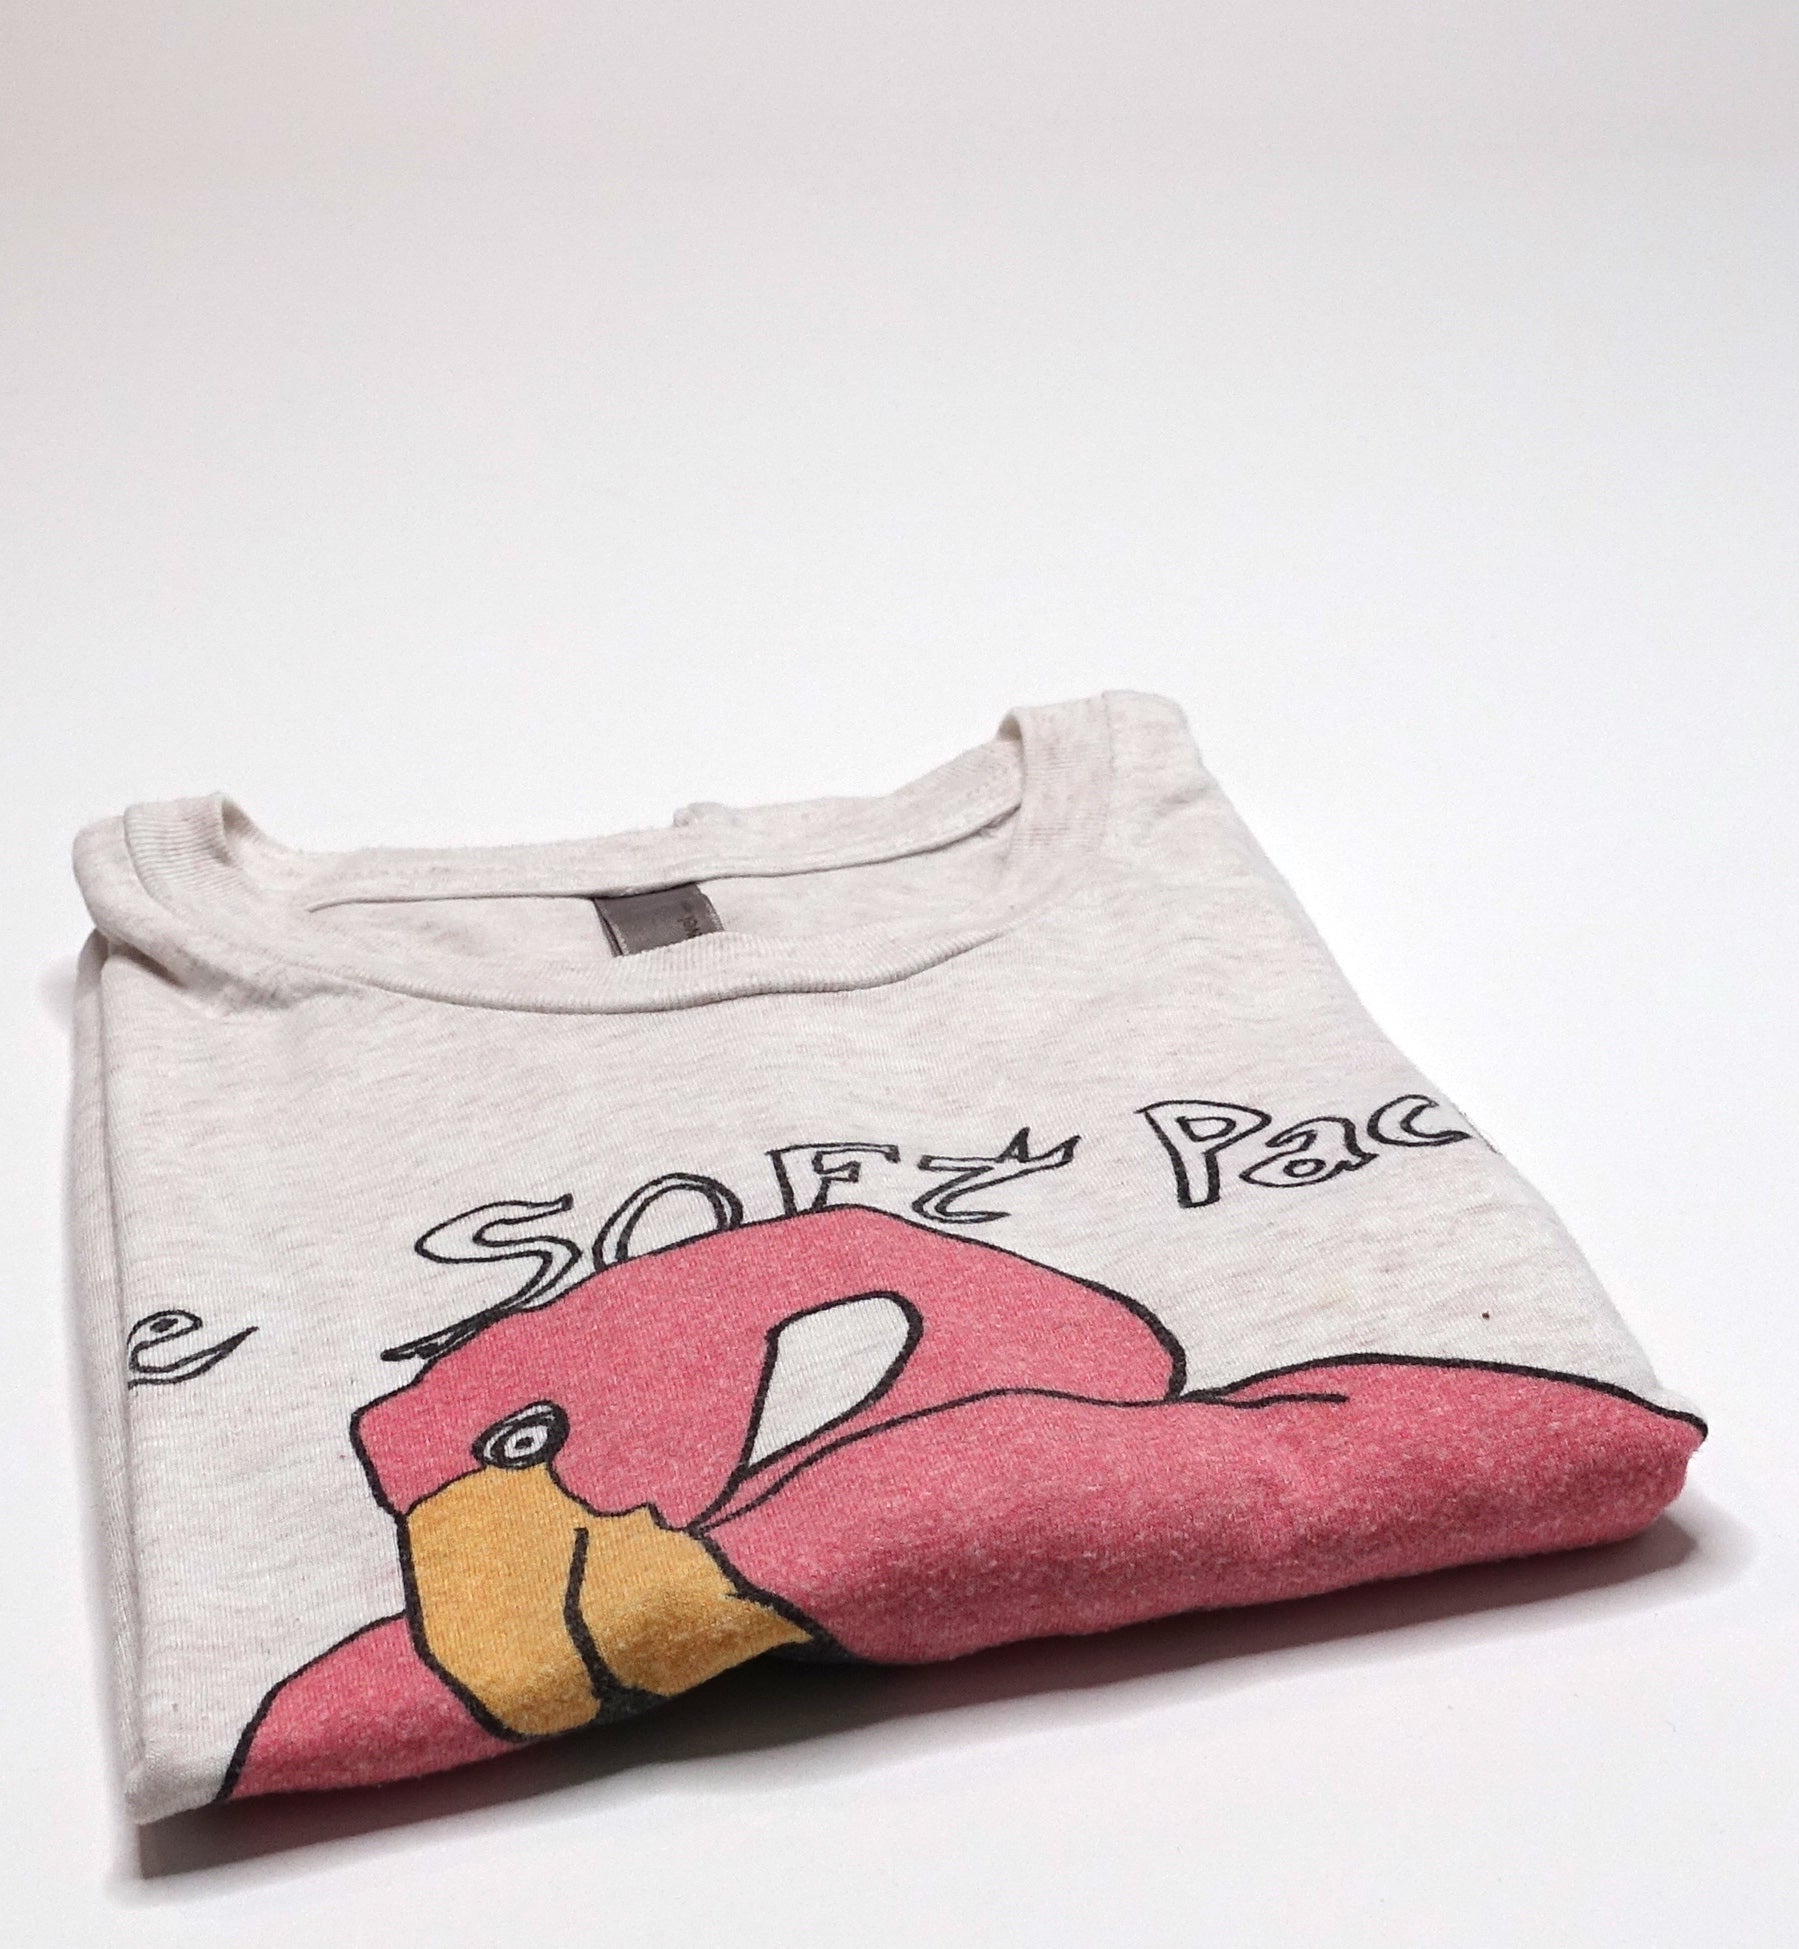 the Soft Pack ‎– Flamingo Logo 2012 Tour Shirt Size Small